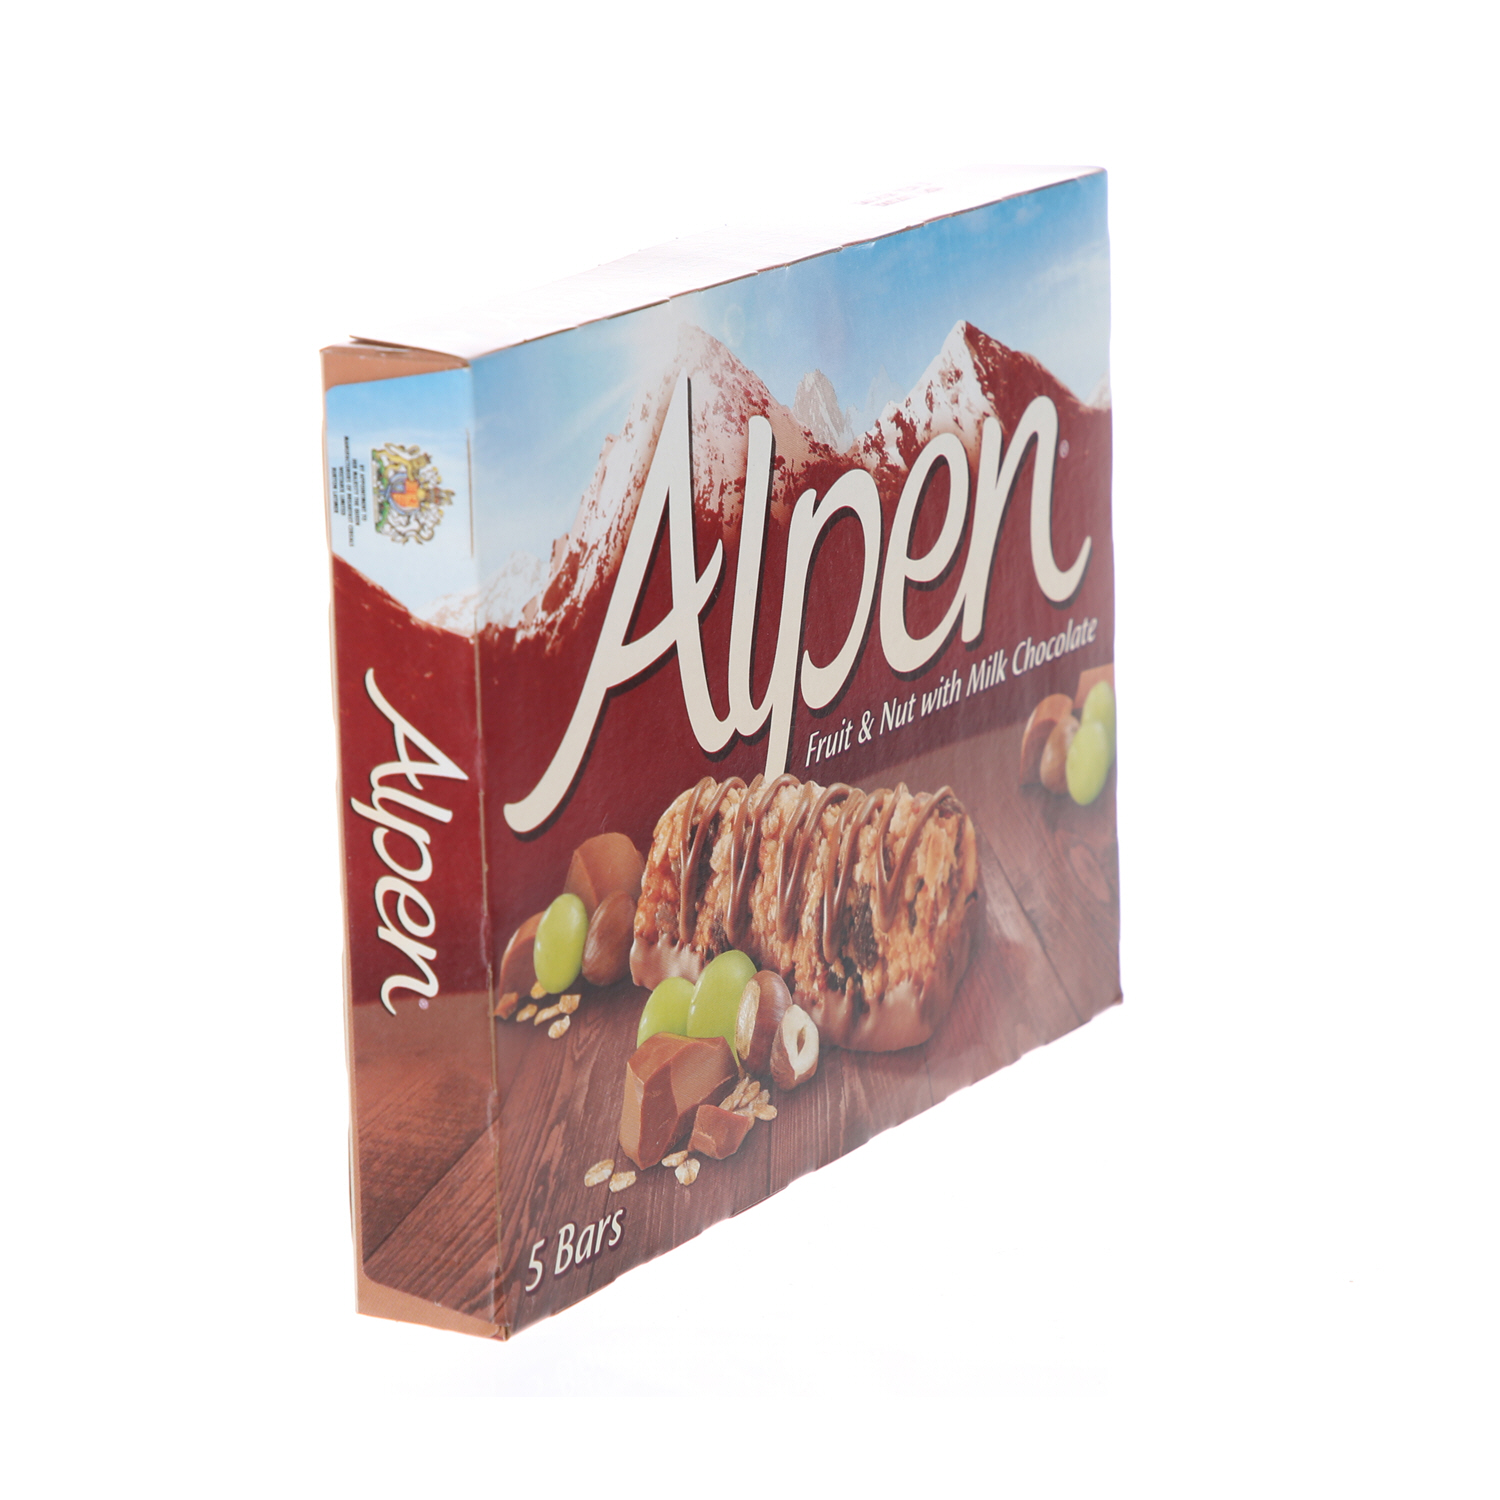 Alpen Bar Fruit & Nut Chocolate 29 g × 5 Pieces